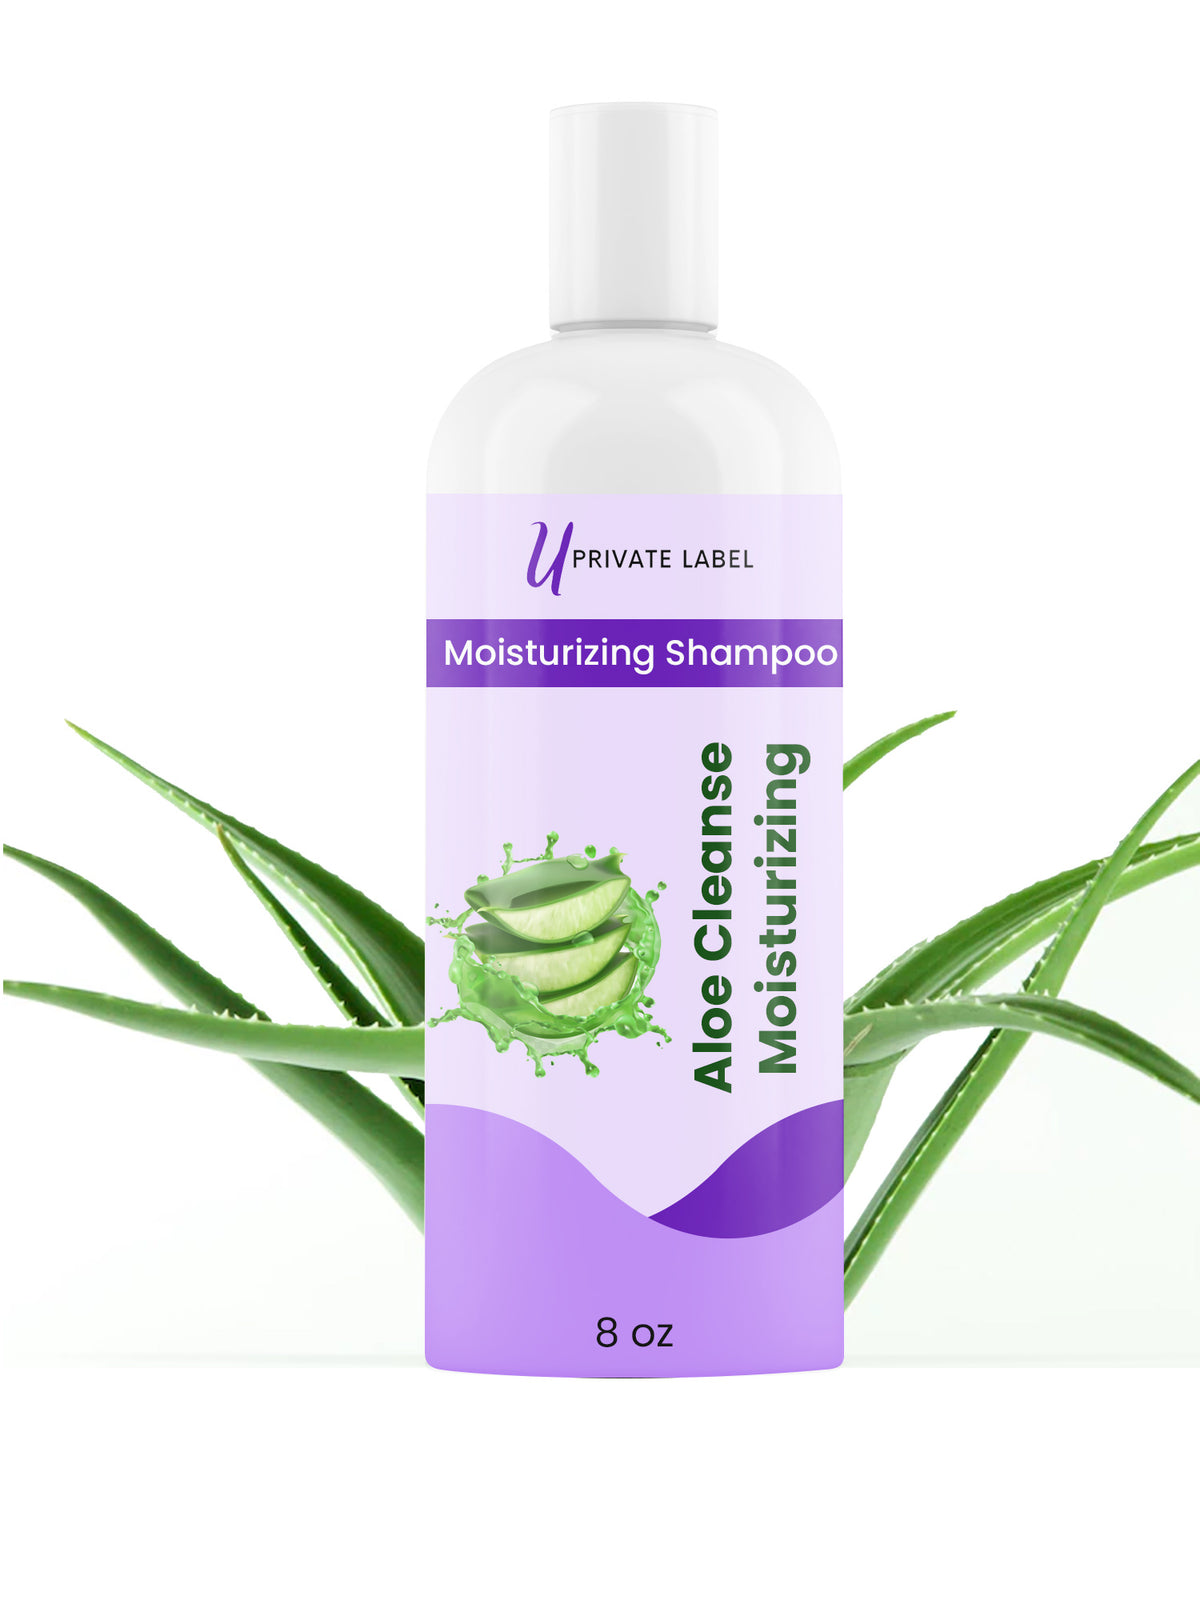 Aloe Cleanse Moisturizing Shampoo U Label